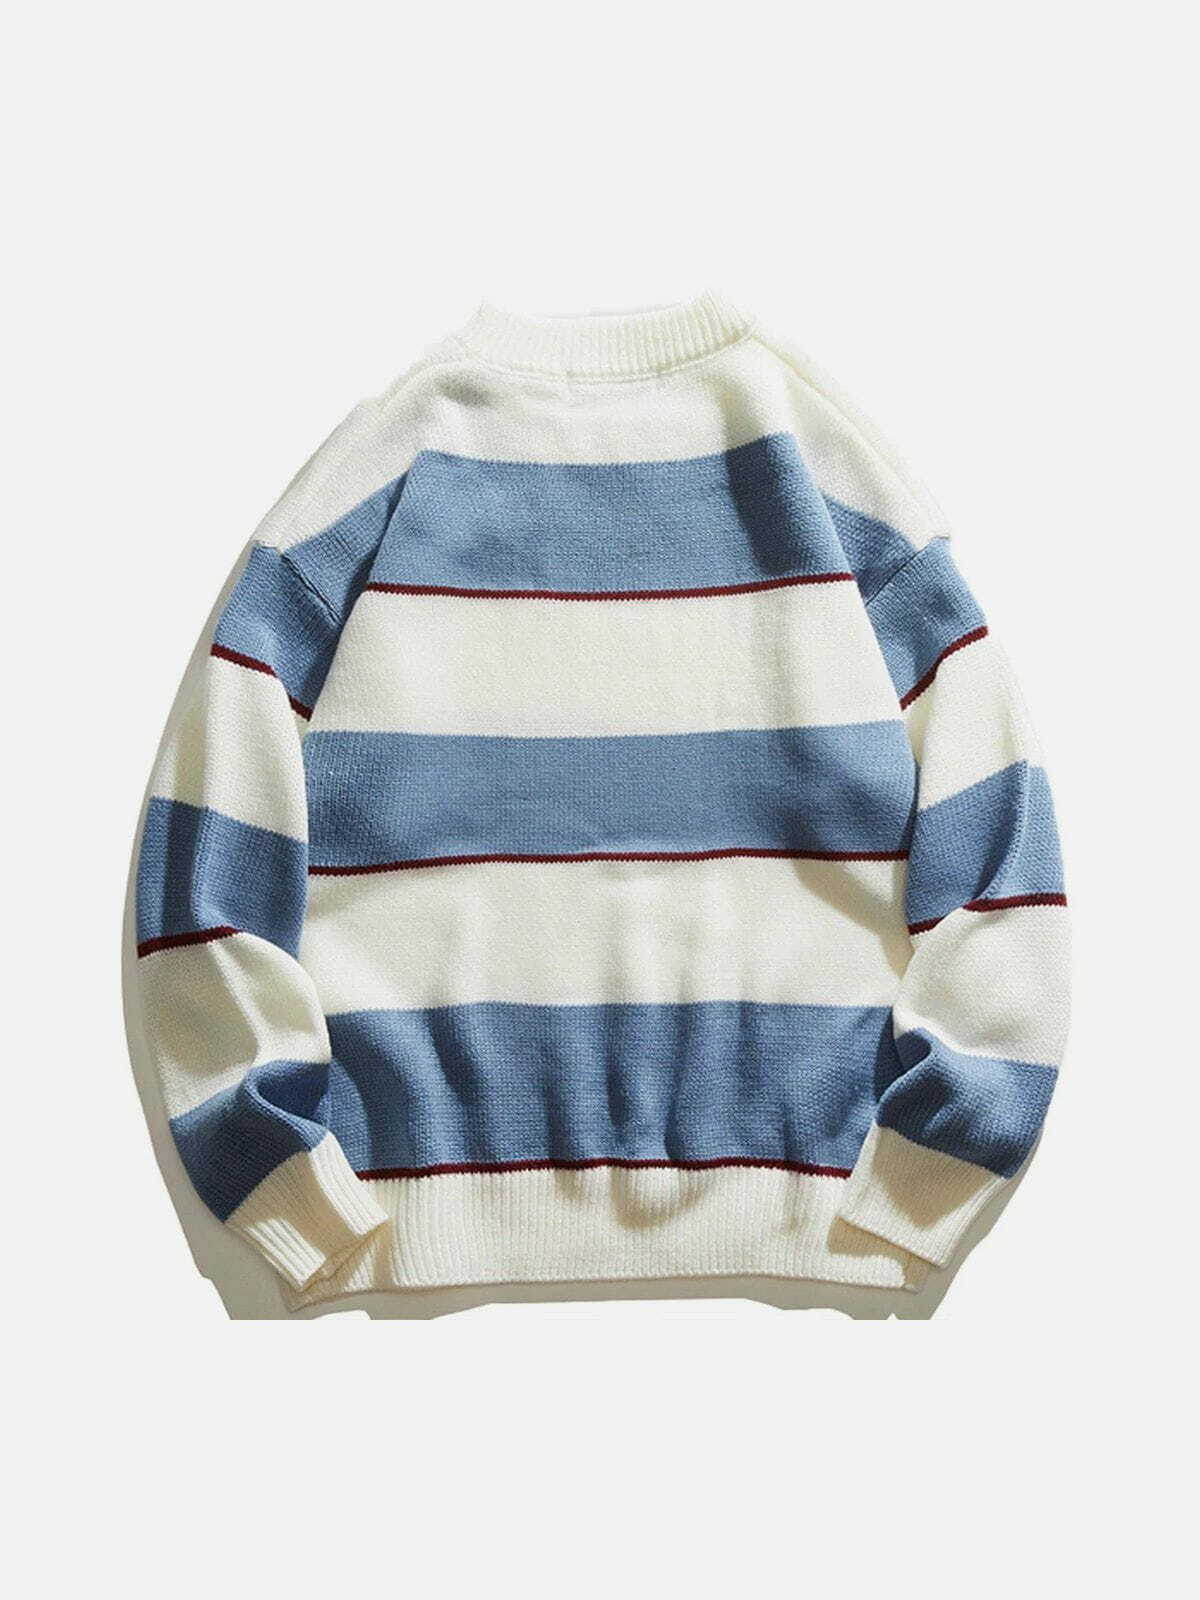 vibrant stitched stripes knit sweater retro urban style 7243